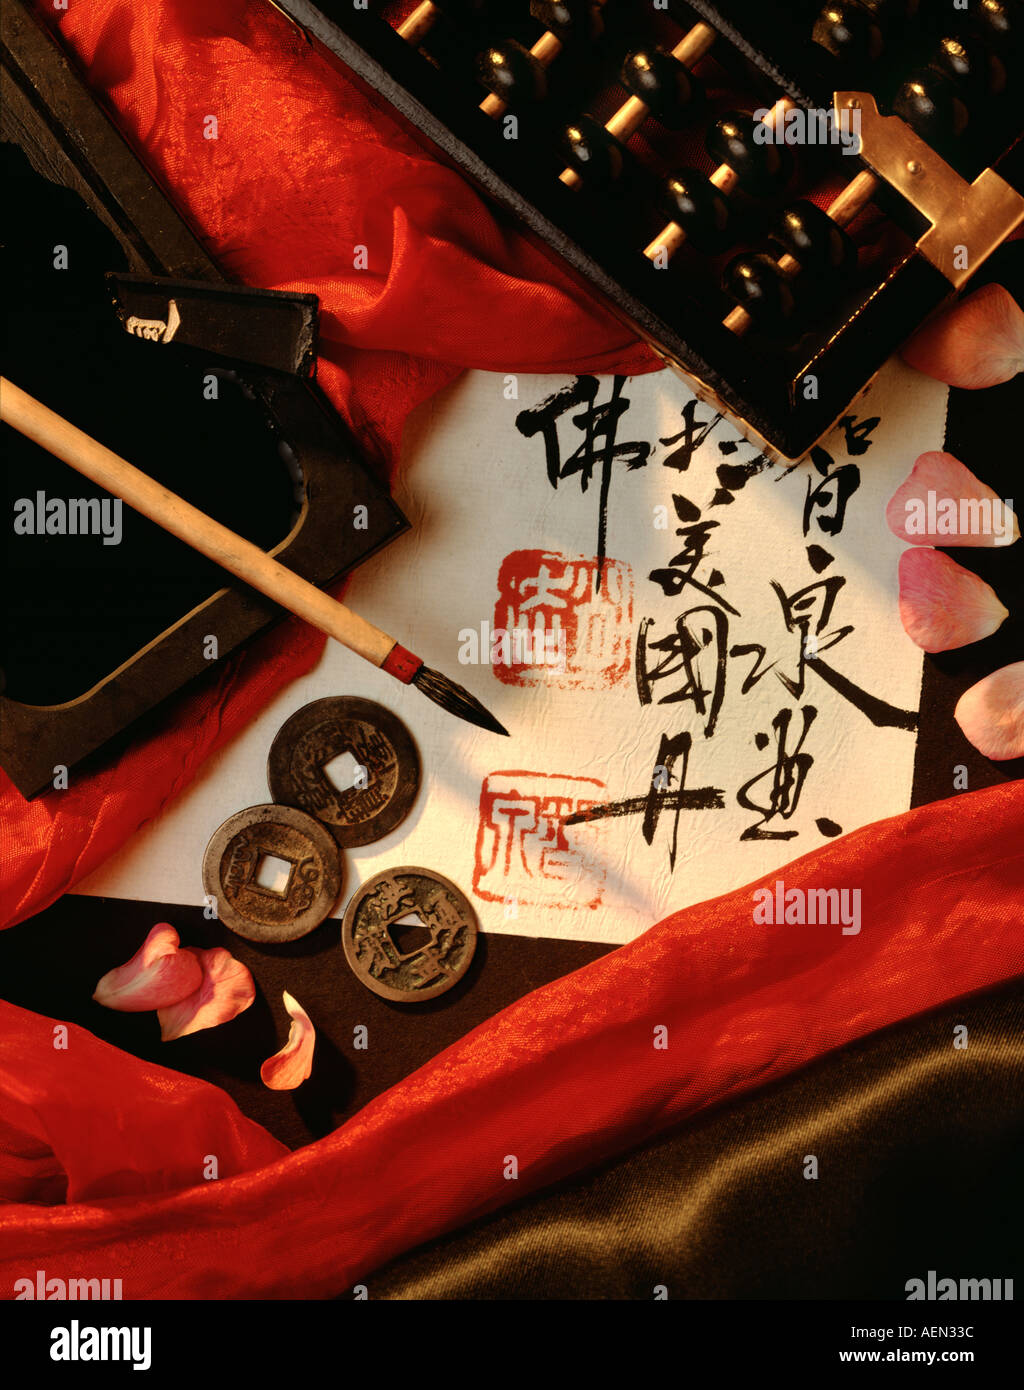 Still life de monedas chinas con caligrafía Foto de stock